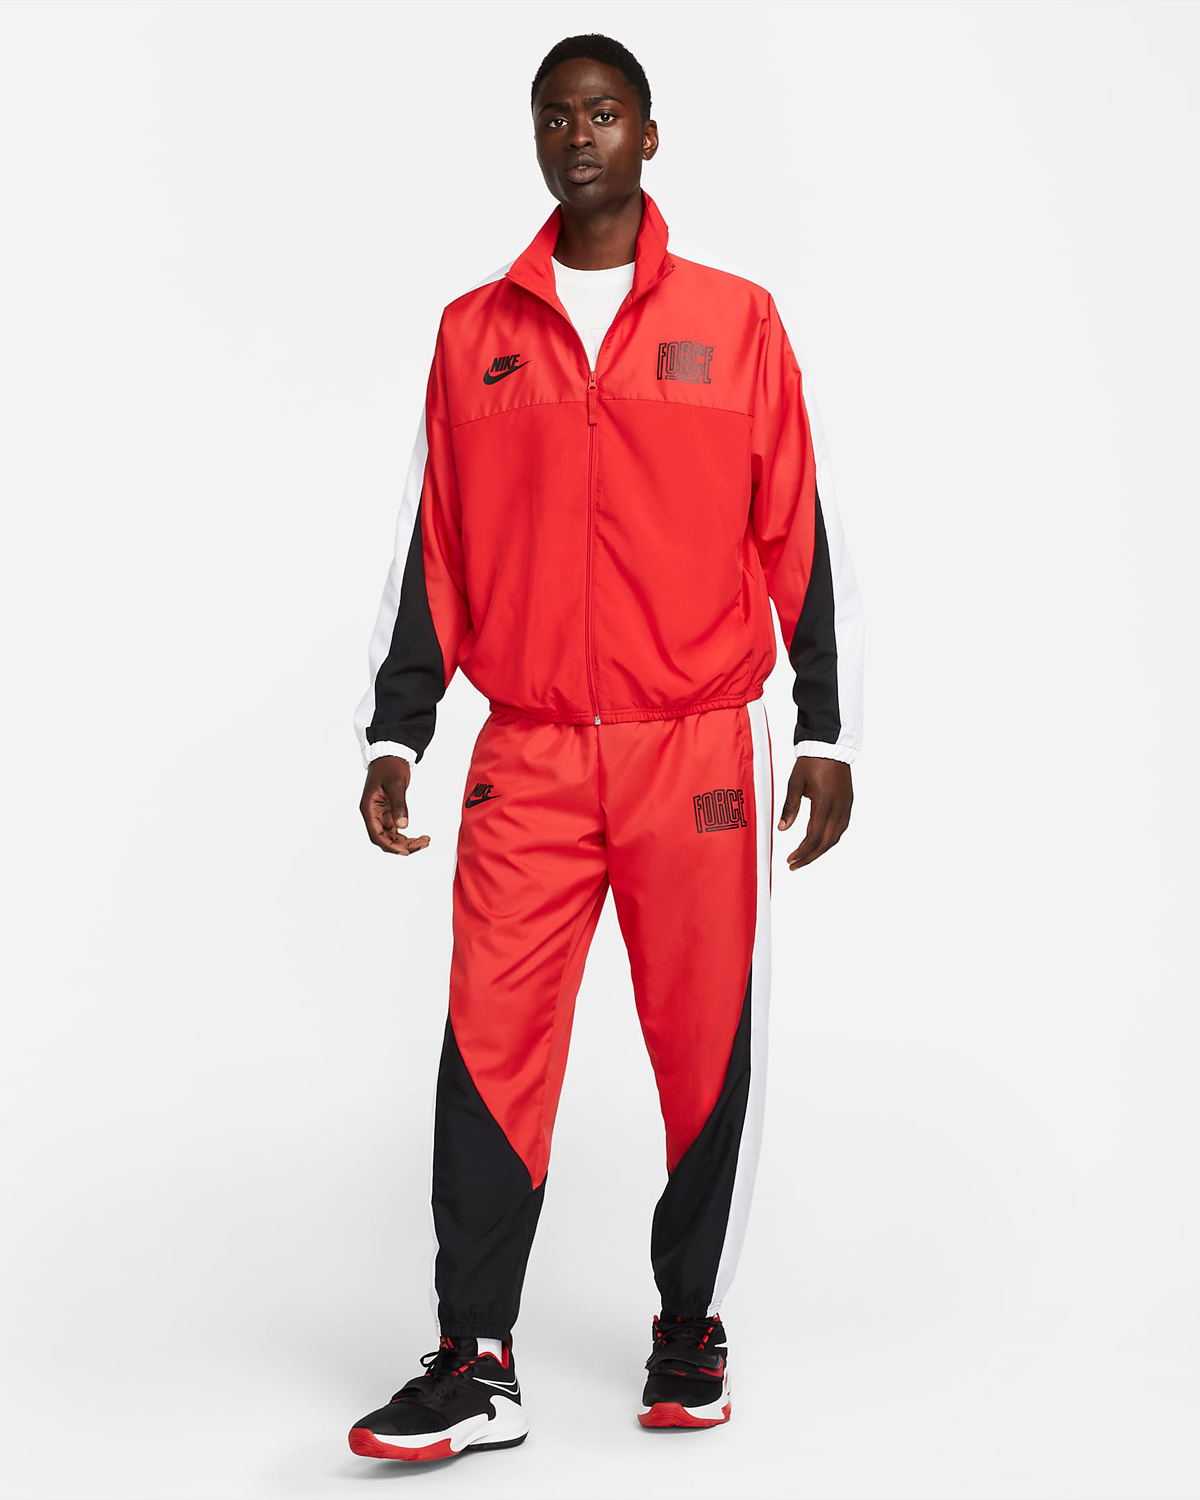 Nike-Starting-5-Basketball-Pants-University-Red-Black-Outfit